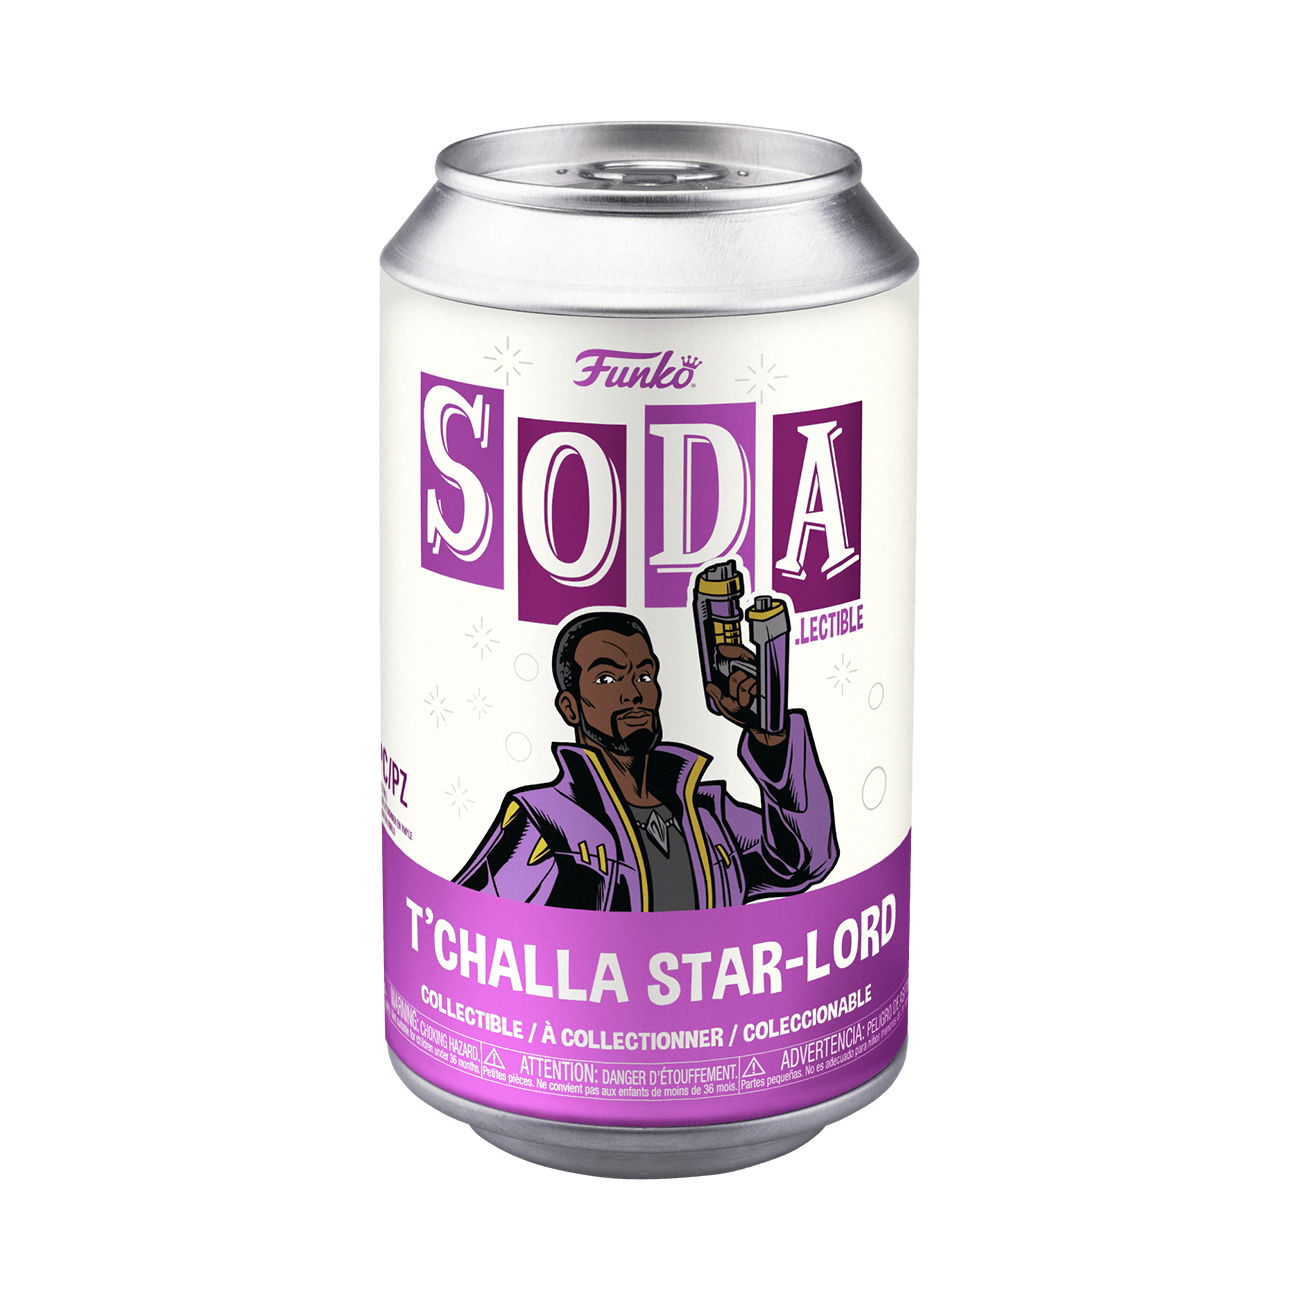 Funko Soda Marvel TChalla Star Lord What If?